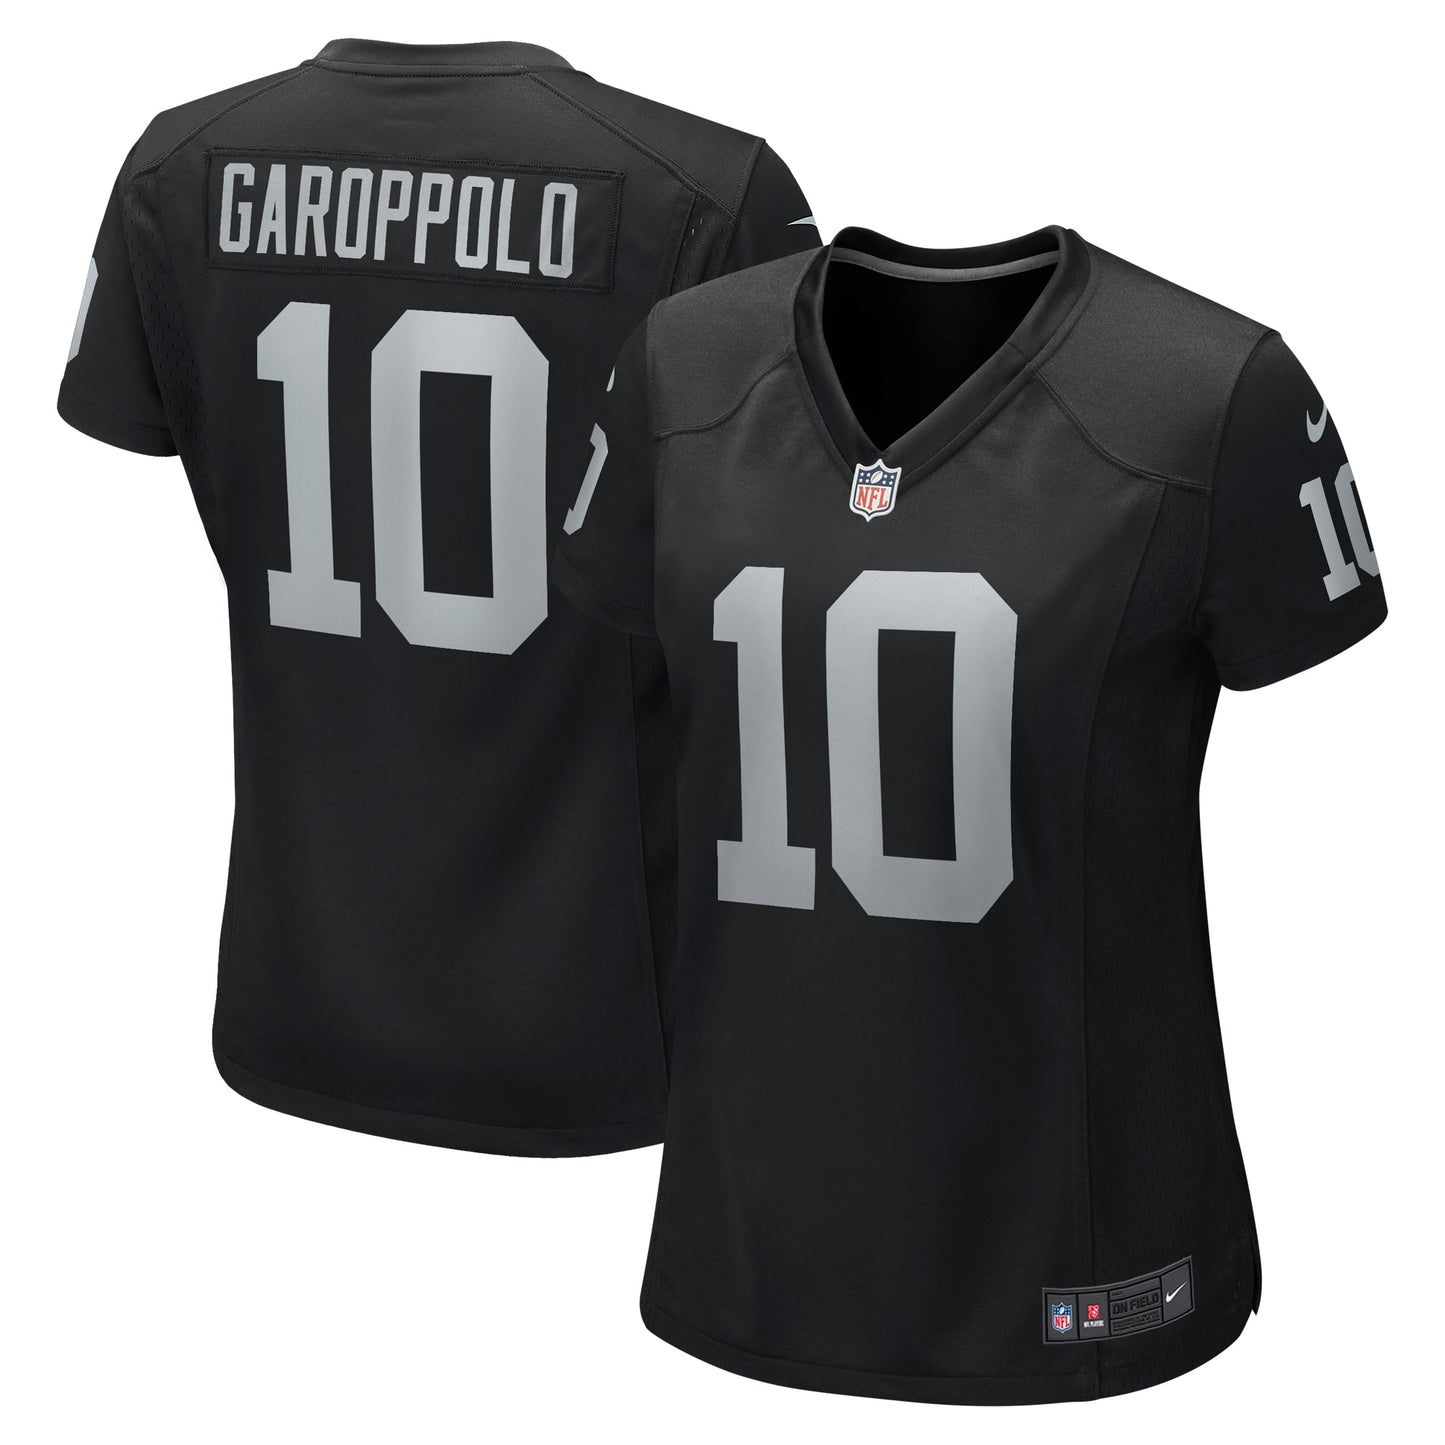 Jimmy Garoppolo Las Vegas Raiders Nike Women's Player Jersey - Black